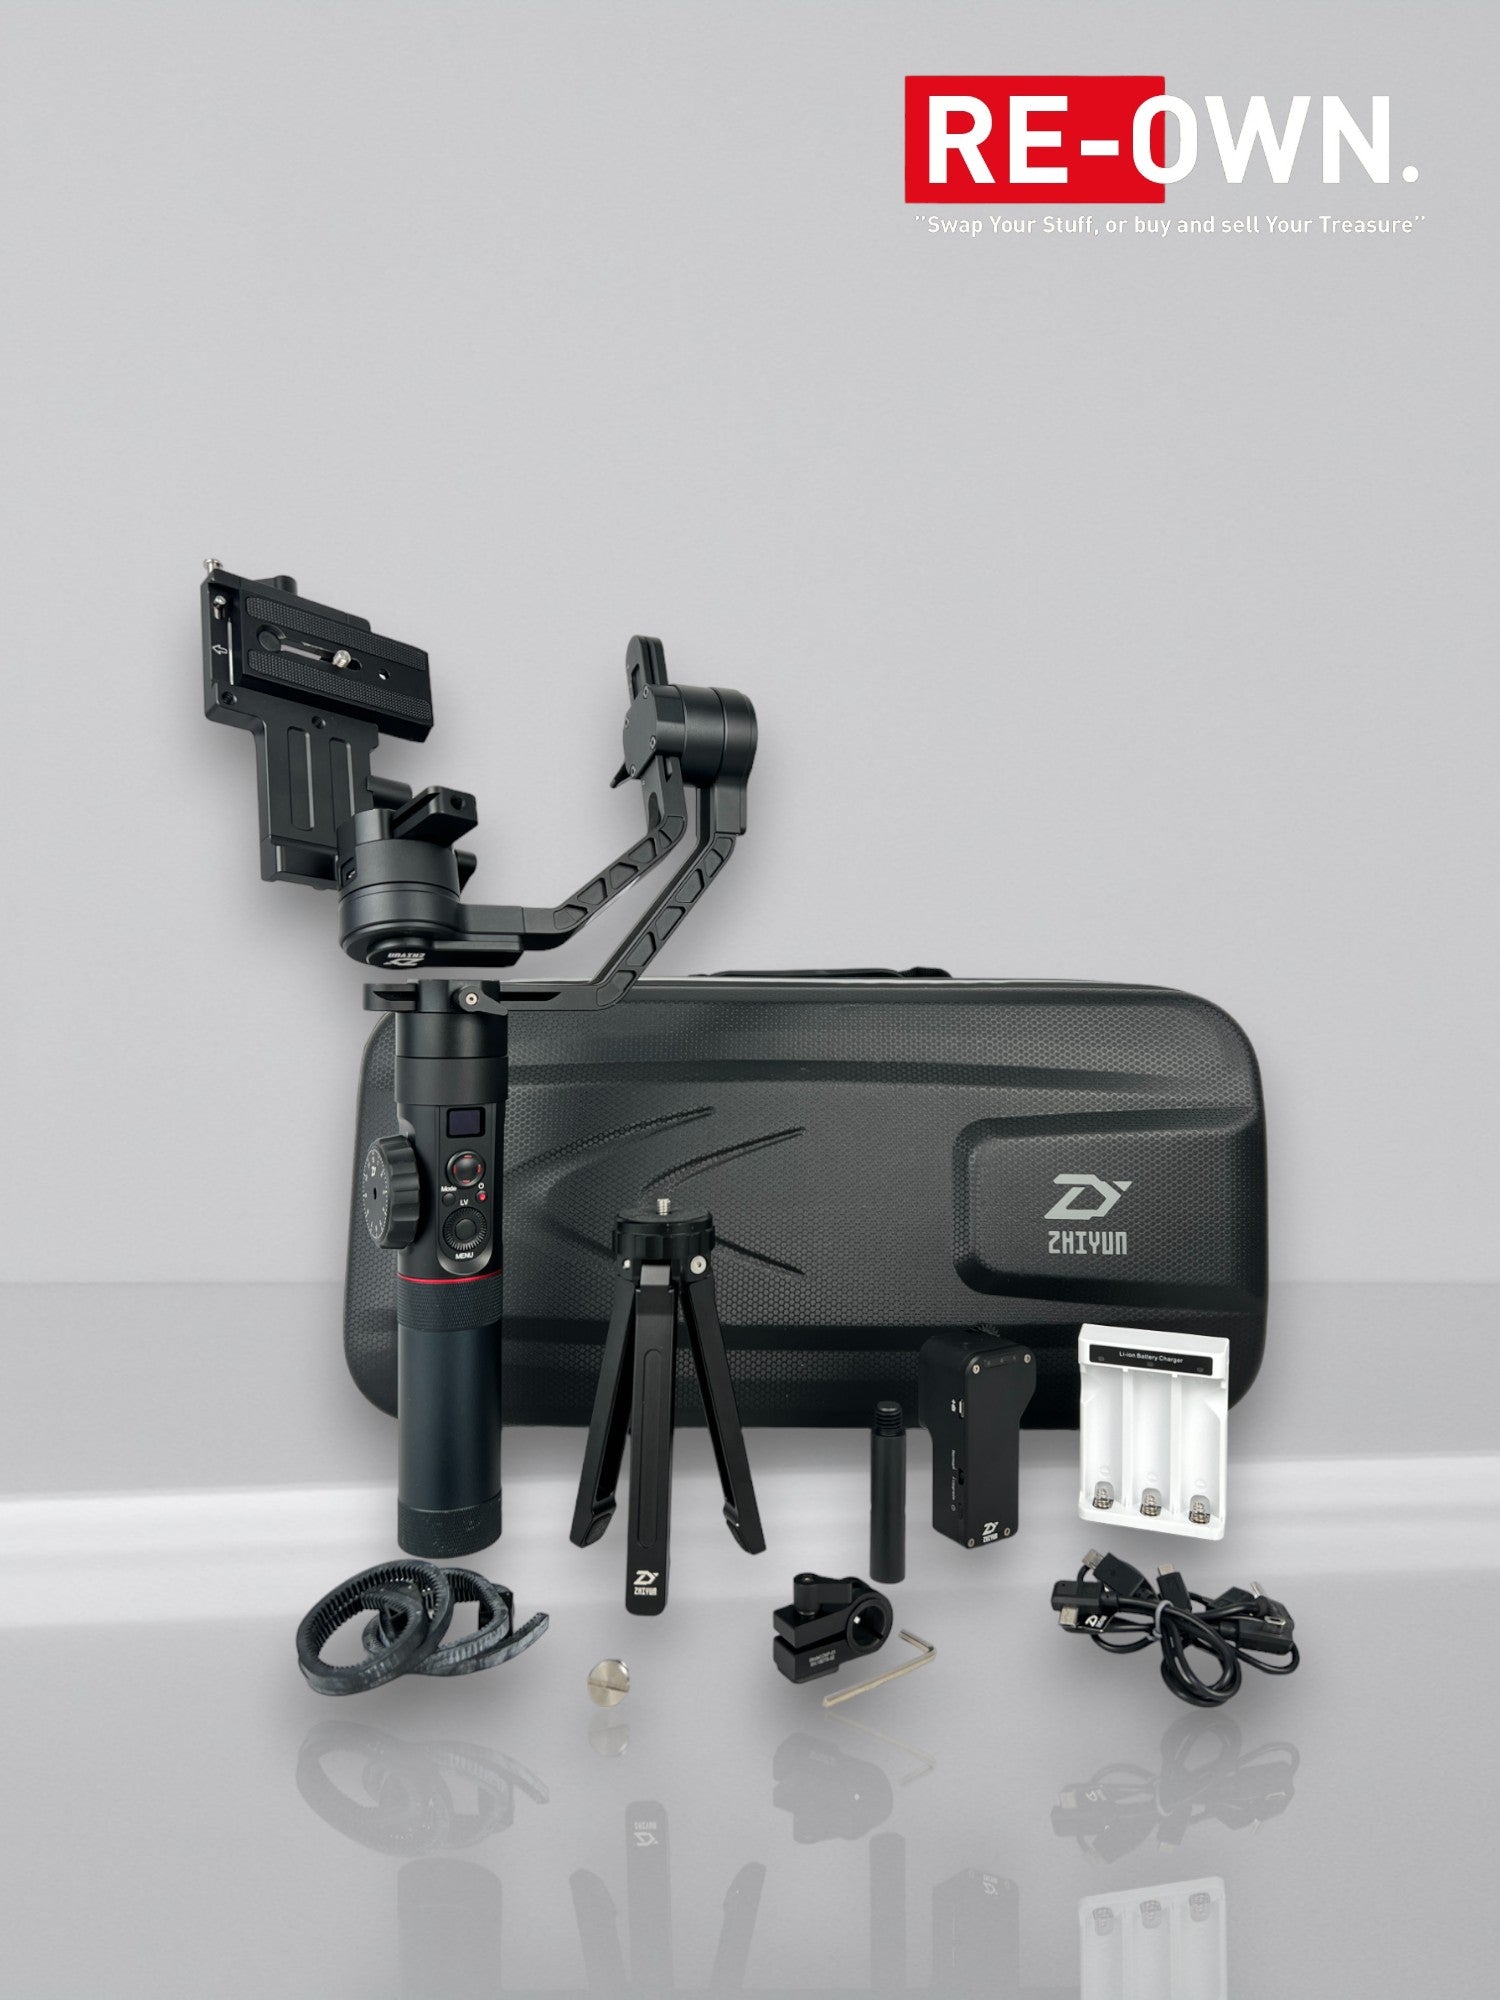 Zhiyun Crane 2 Gimbal Camera Stabilizer